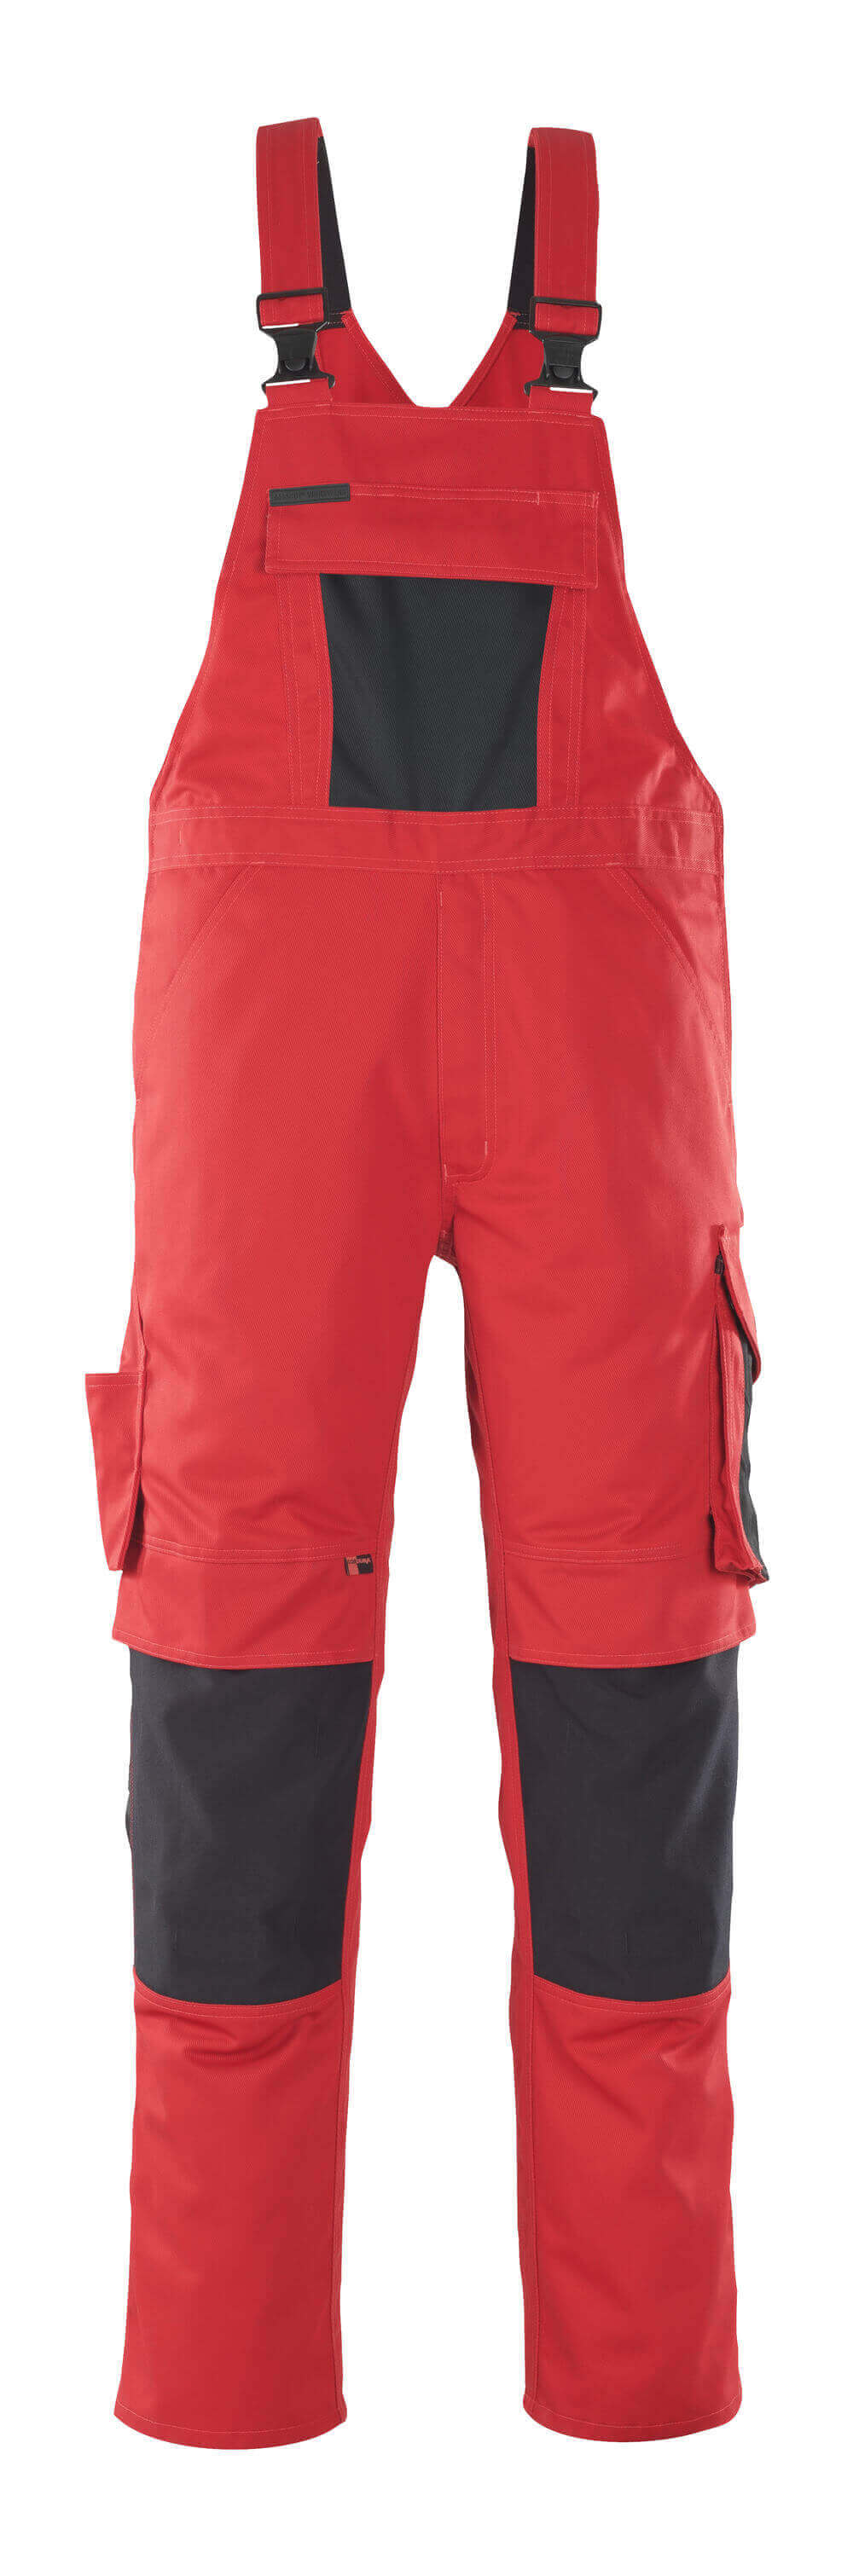 Mascot UNIQUE  Leipzig Bib & Brace with kneepad pockets 12069 red/black